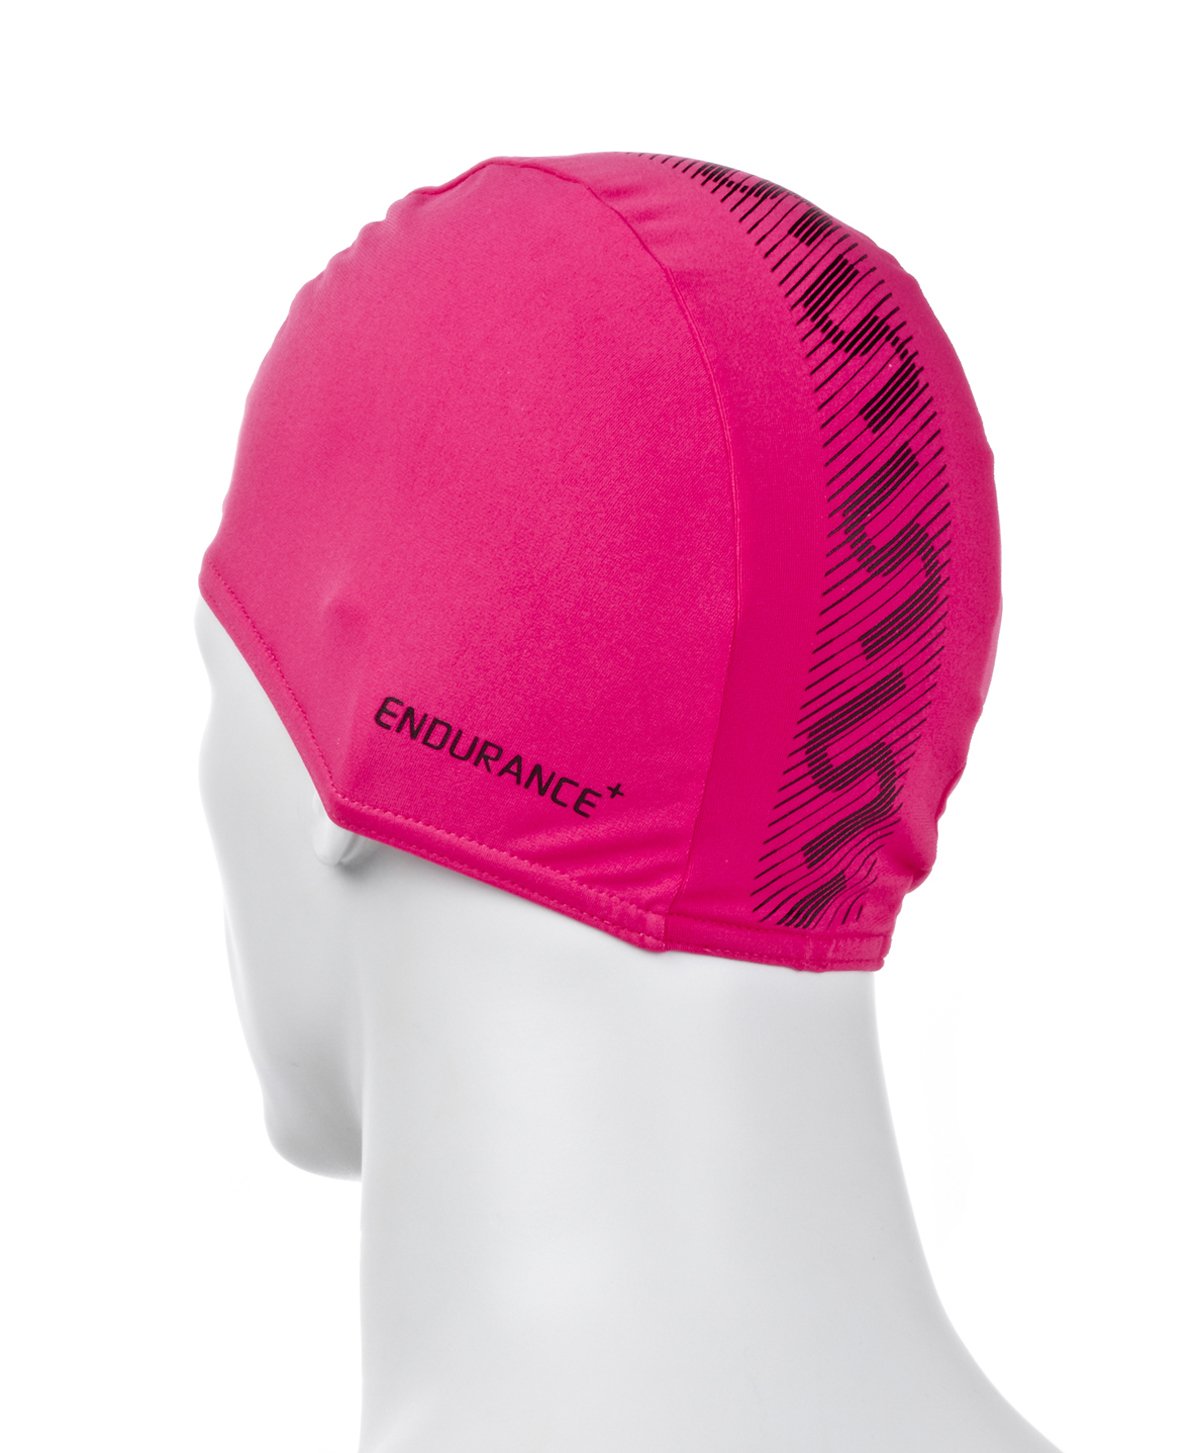 Speedo Monogram Swimcap (Pink/Black) - Best Price online Prokicksports.com